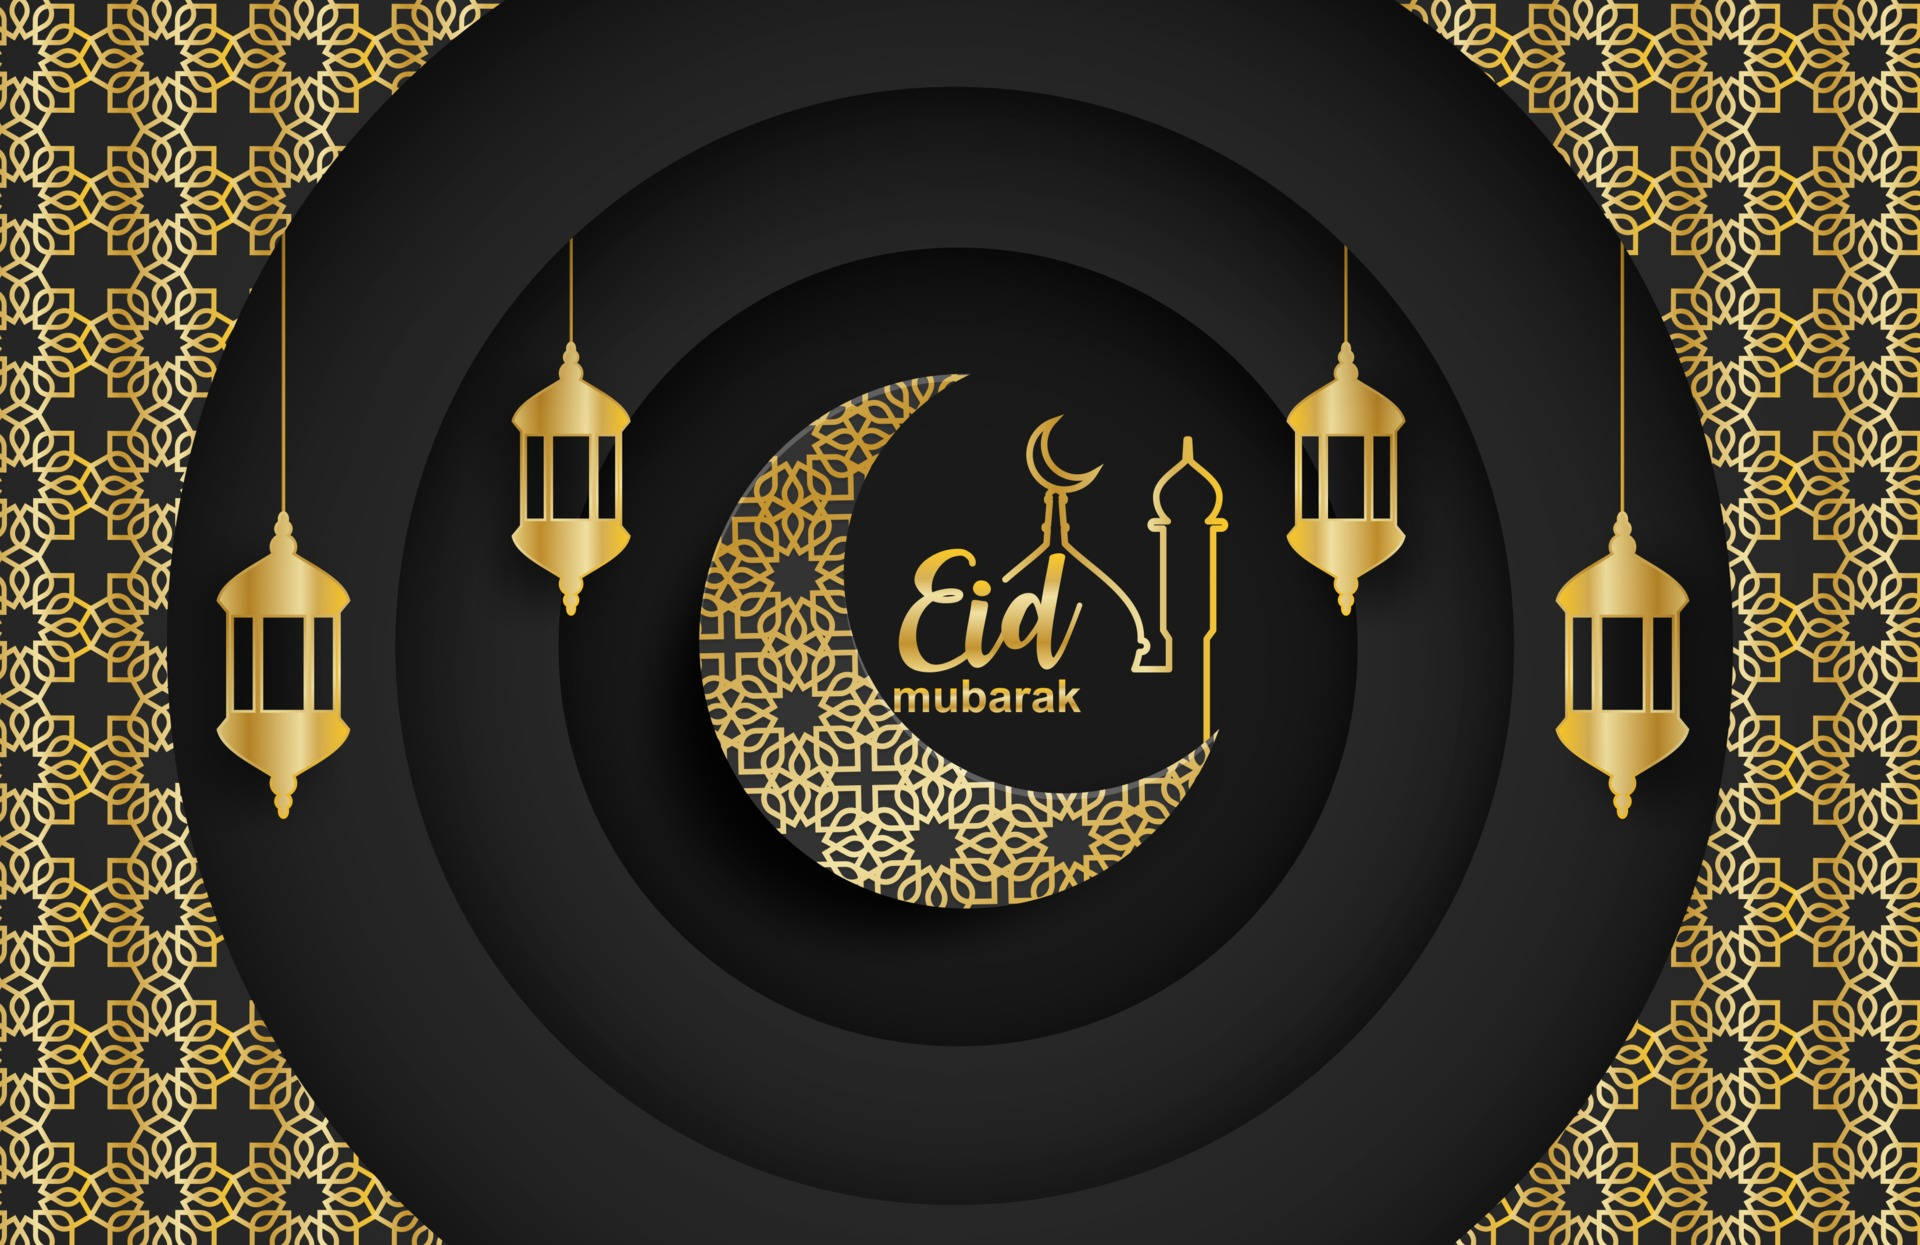 Celebrating Eid Mubarak With Joy And Harmony Wallpaper